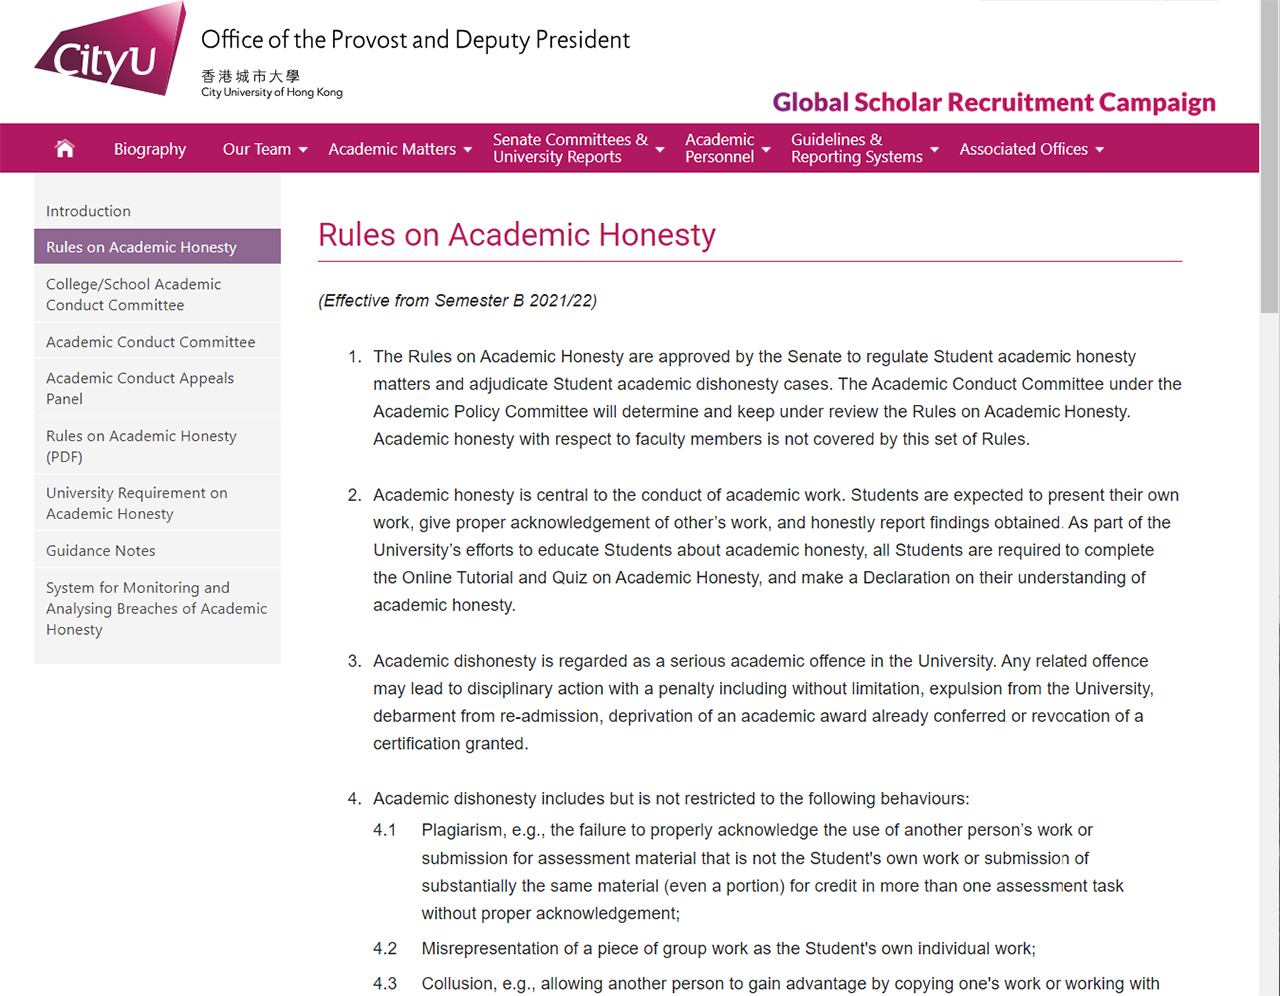 Rules on Academic Honesty